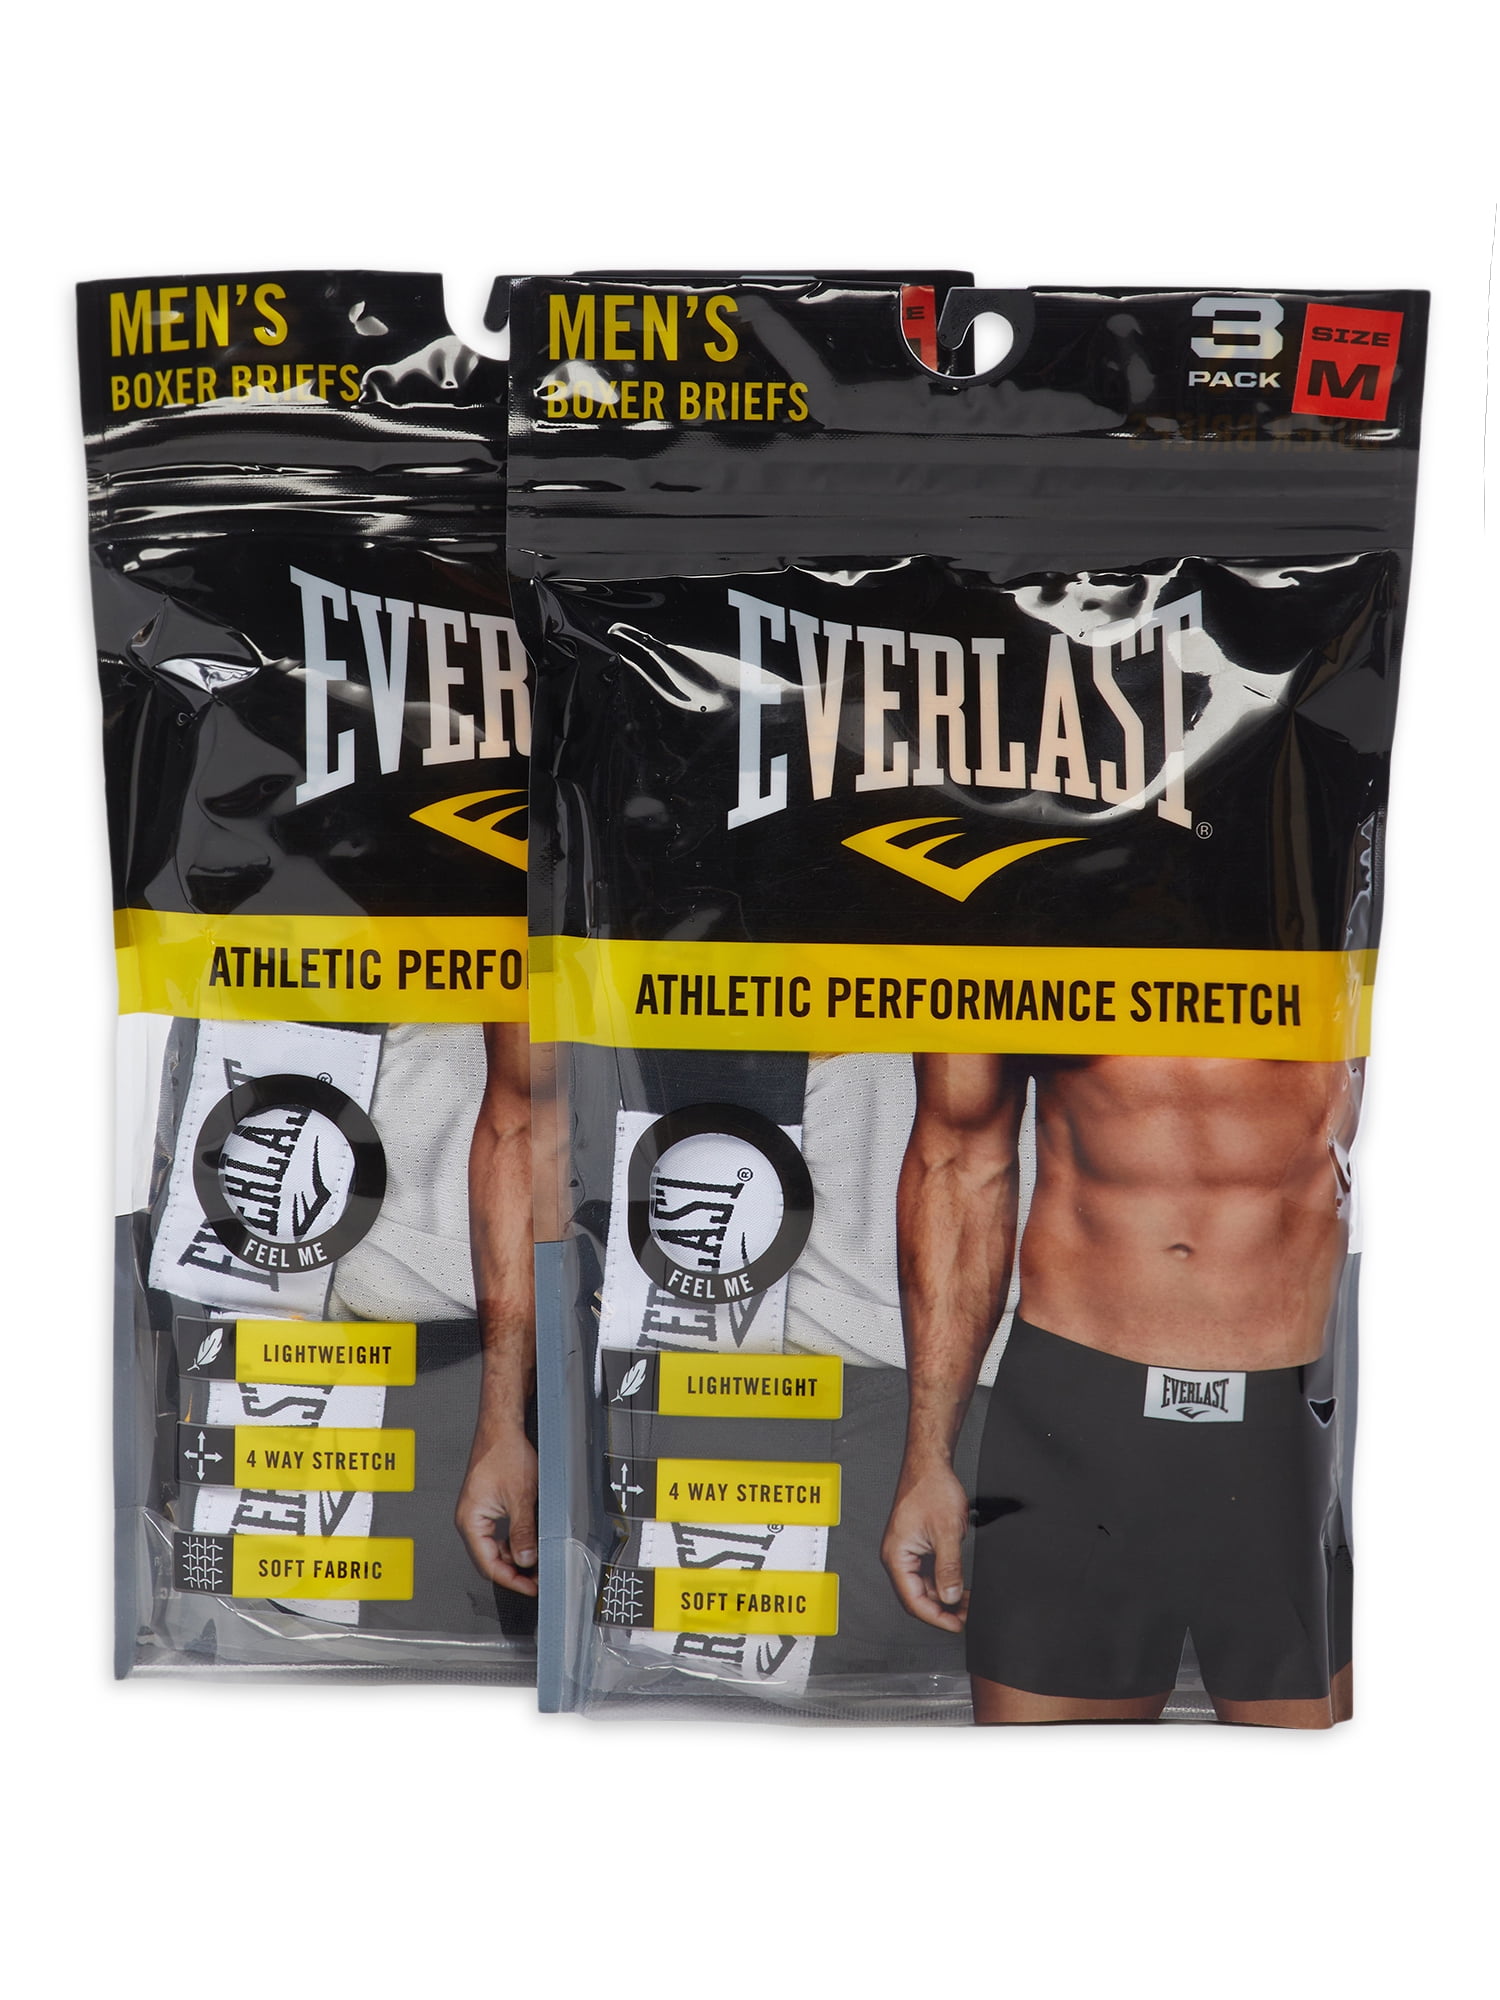 Everlast Men's Boxer Briefs, 6-Pack